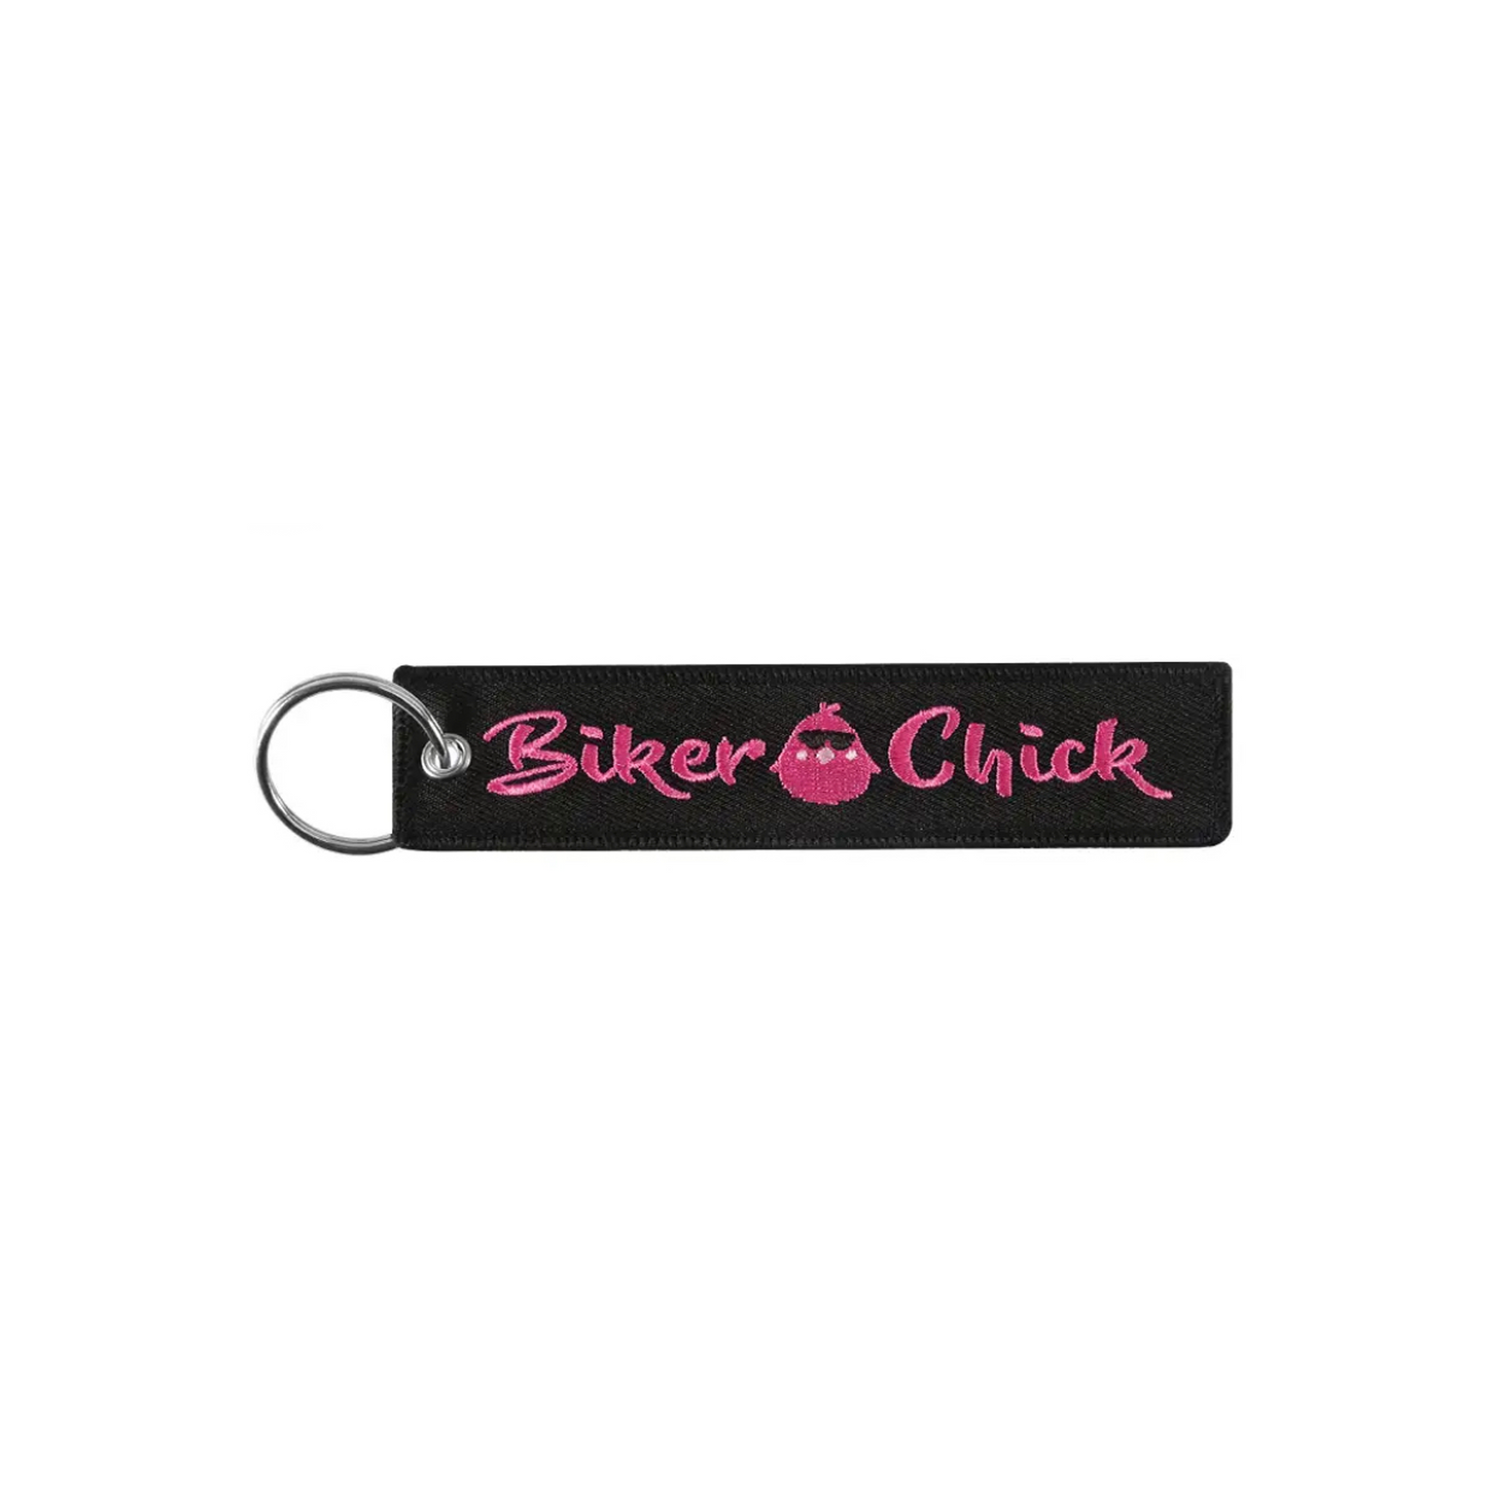 Motorcycle Keychain - Biker Chick